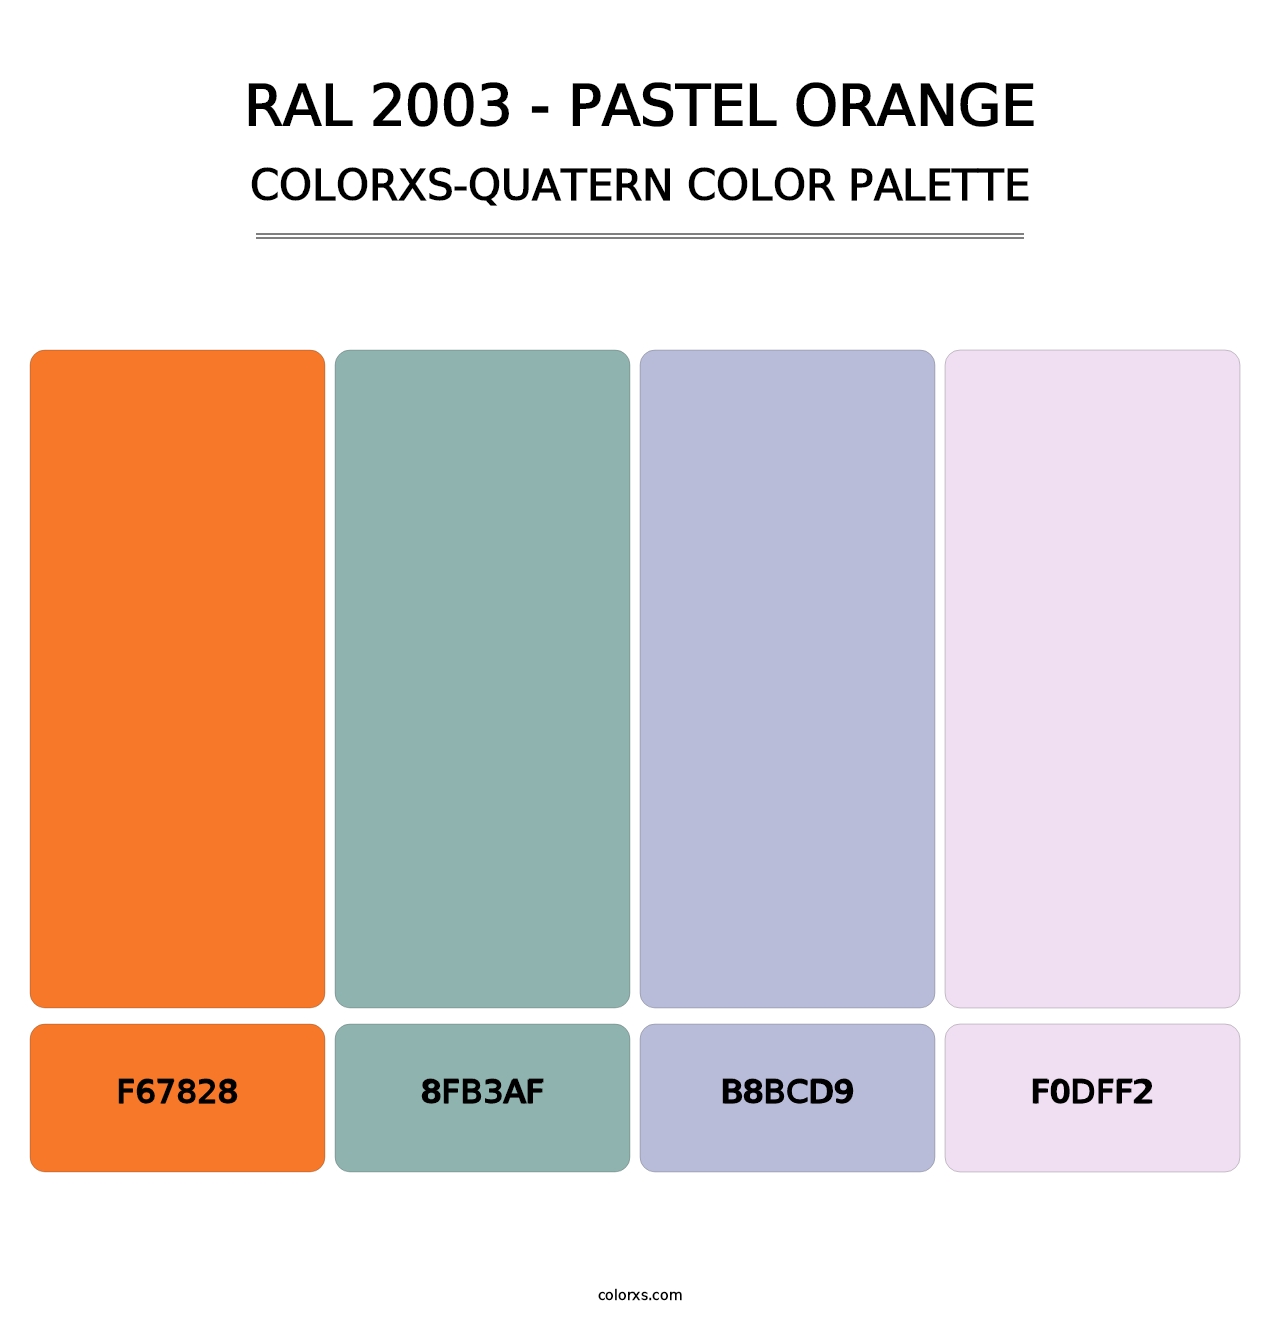 RAL 2003 - Pastel Orange - Colorxs Quatern Palette